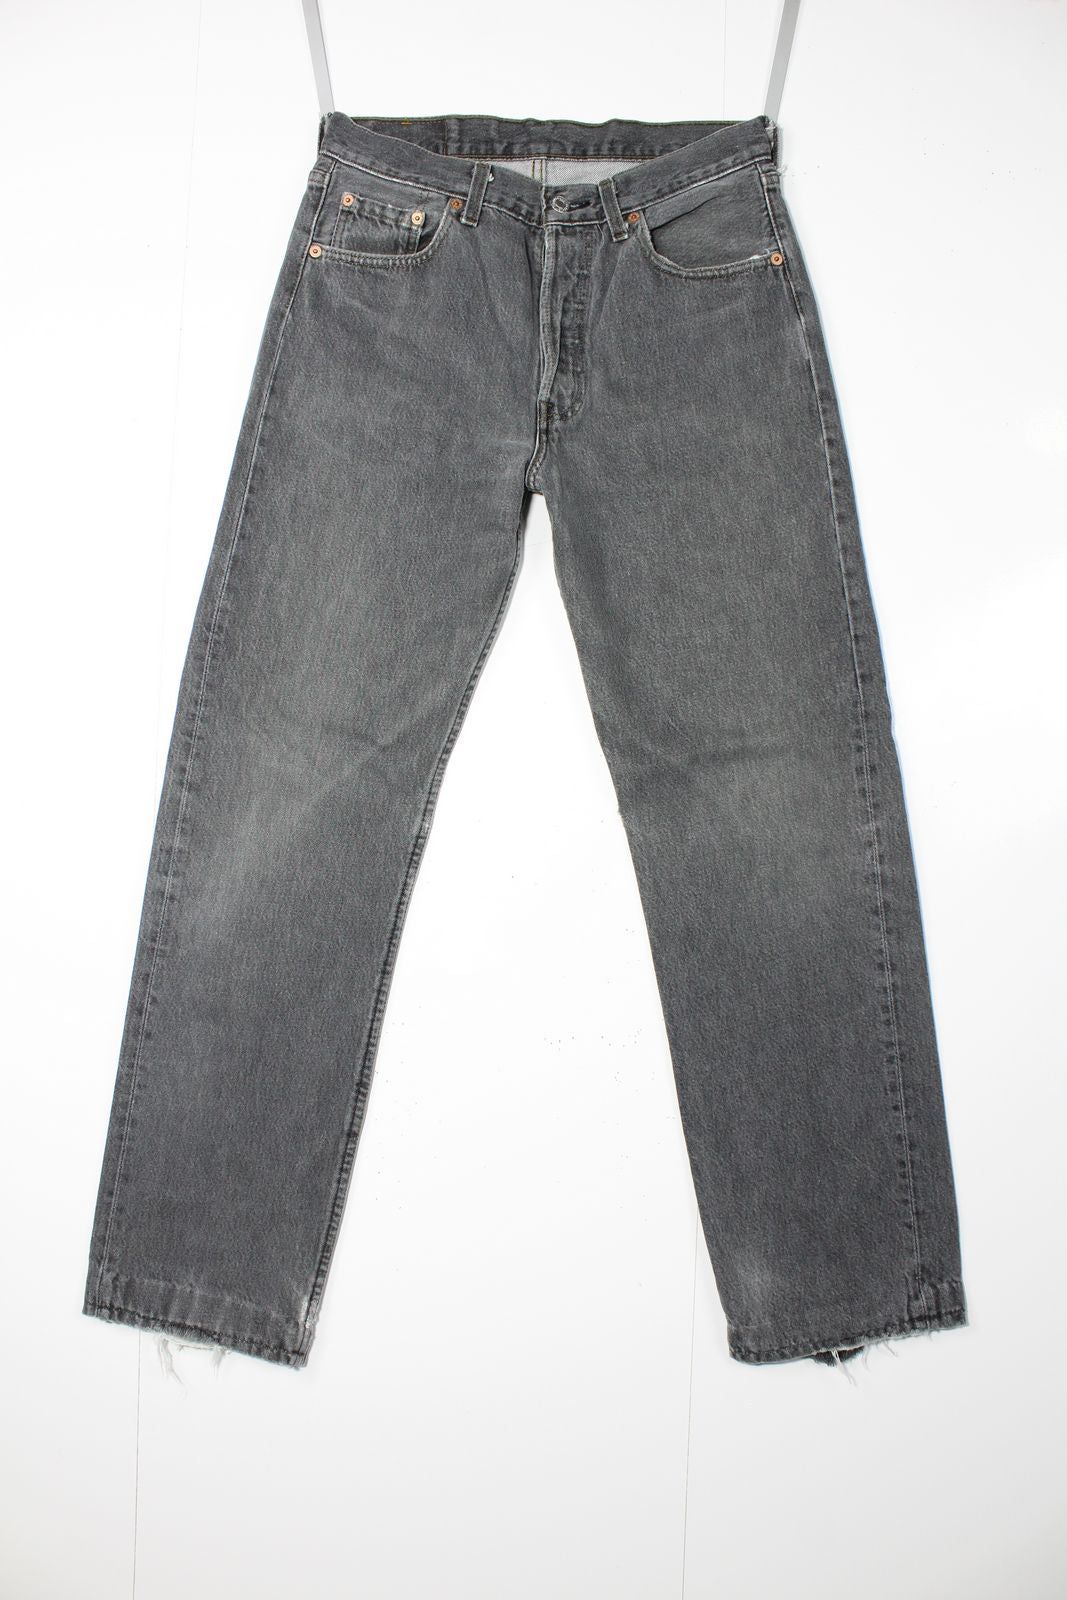 Levi's 501 Denim Nero W31 L34 Made In USA Jeans Vintage